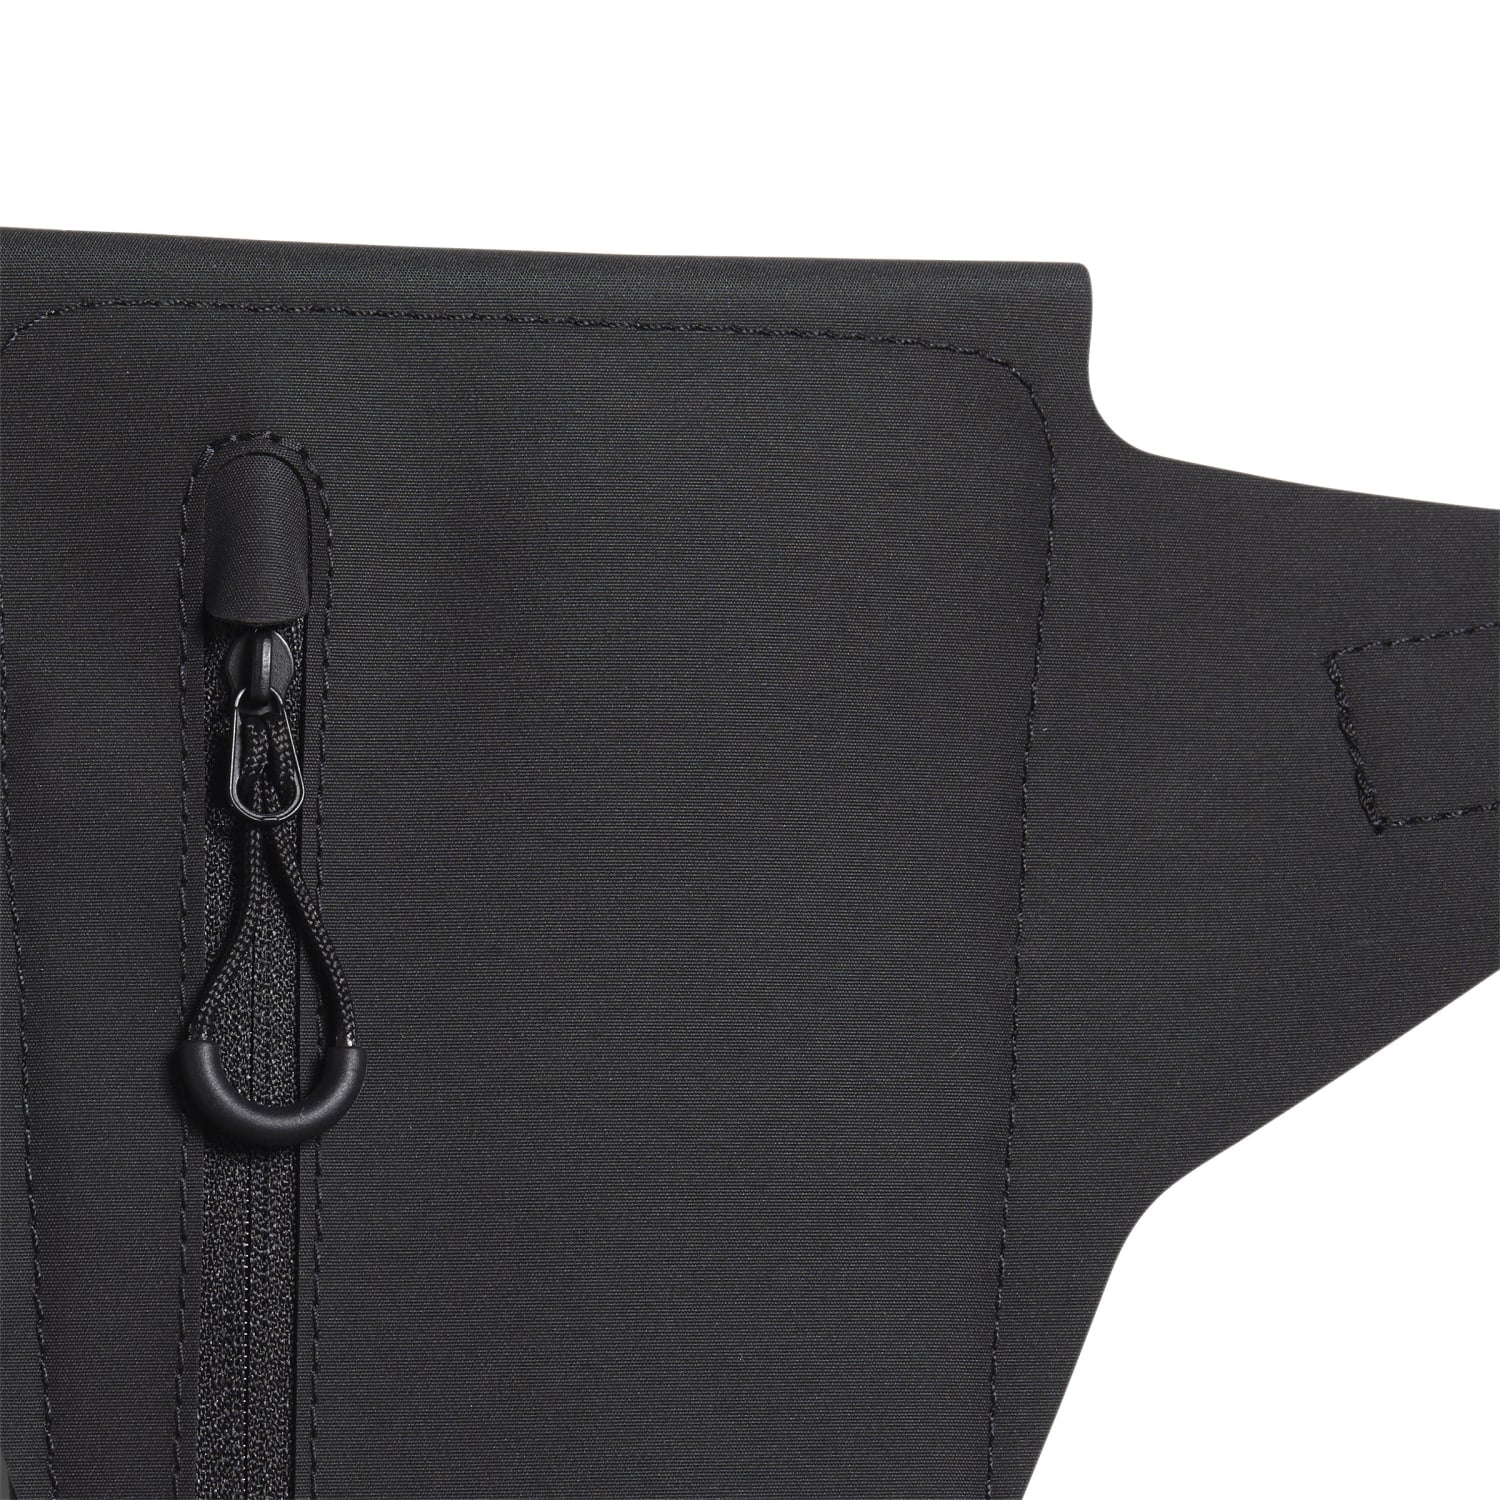 Adidas Run Pocket Bag Black HN8173 - BAGS - Canada